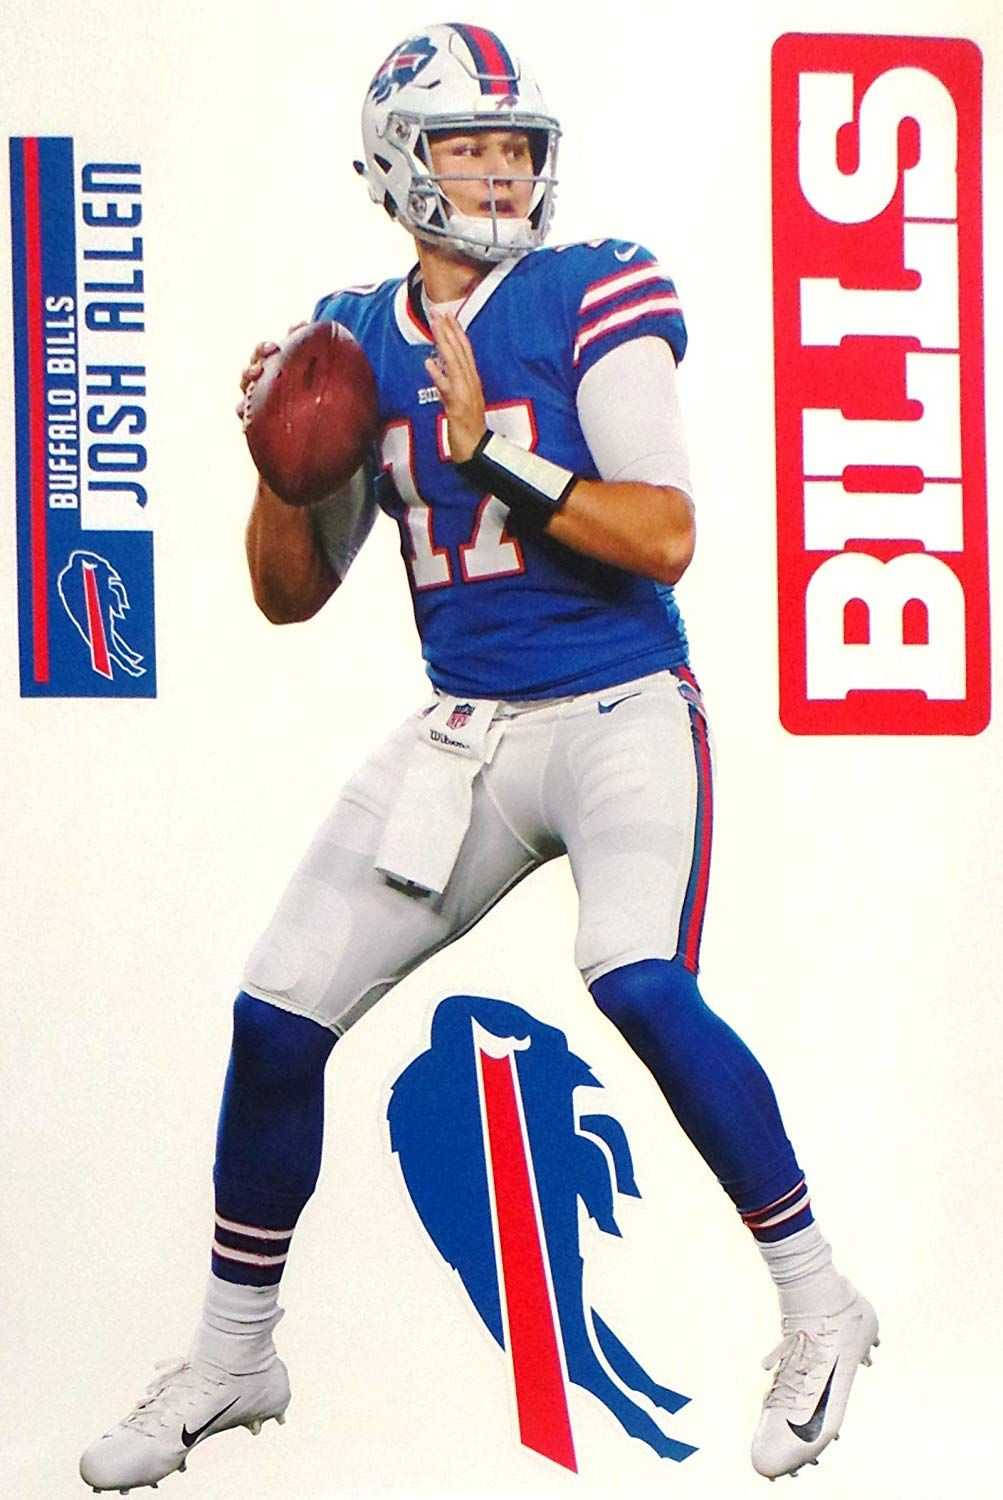 Josh Allen Buffalo Bills